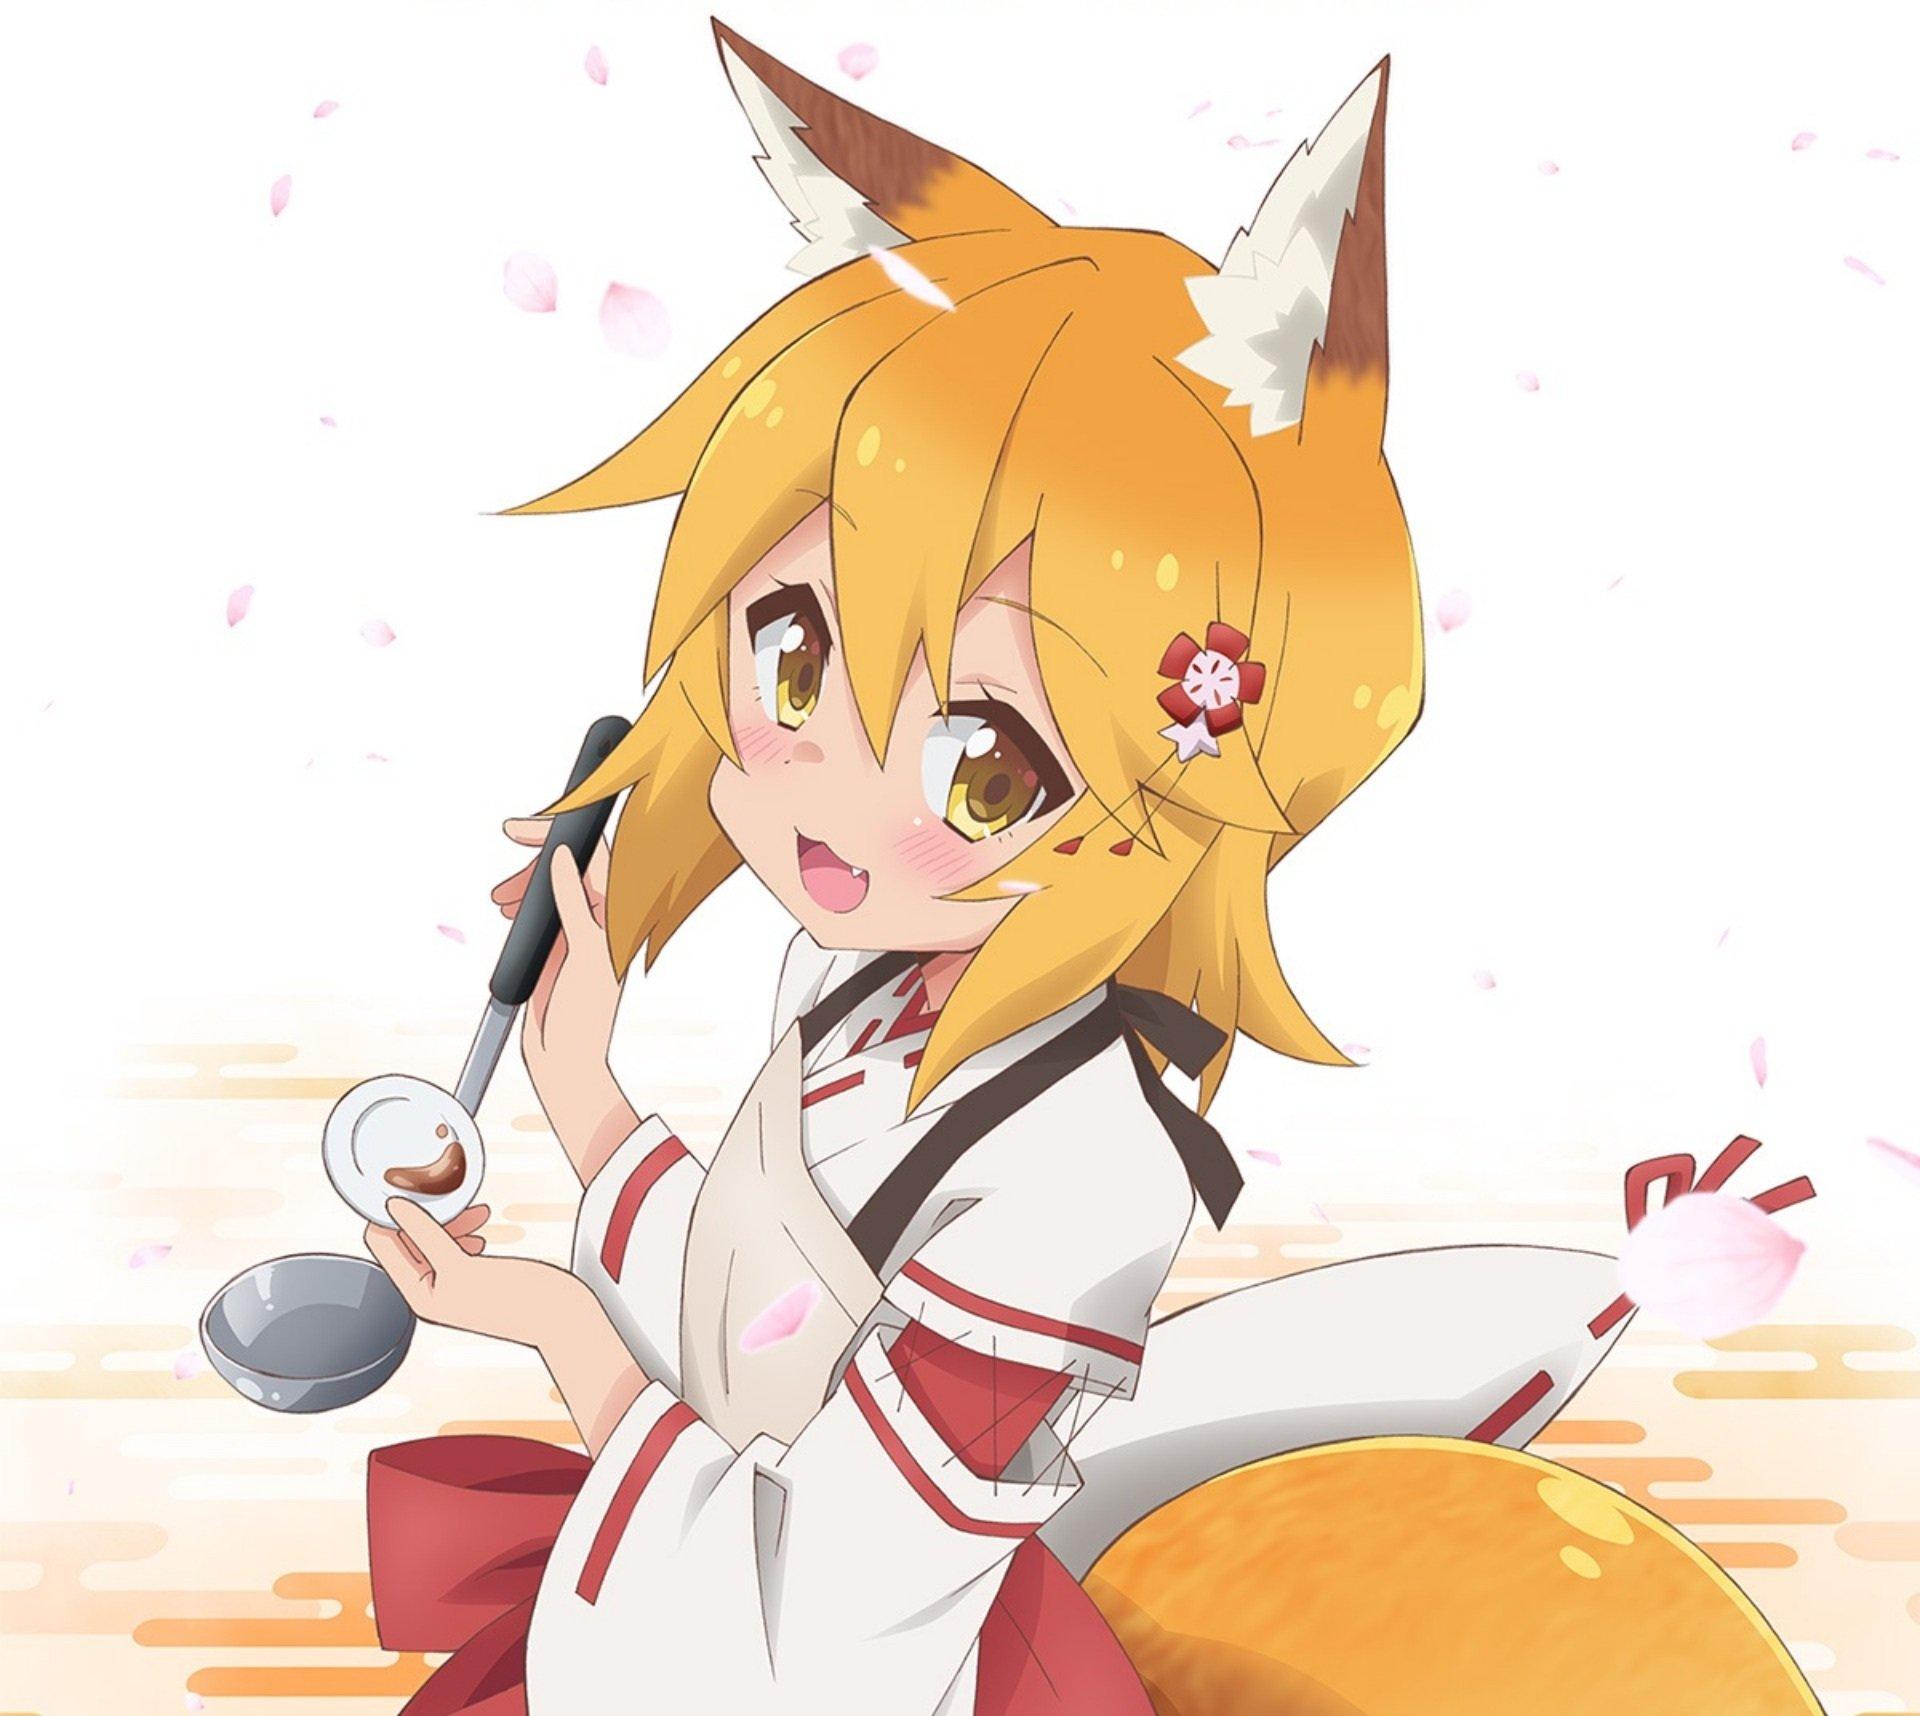 The Helpful Fox Senko San HD Wallpaper. Background Image